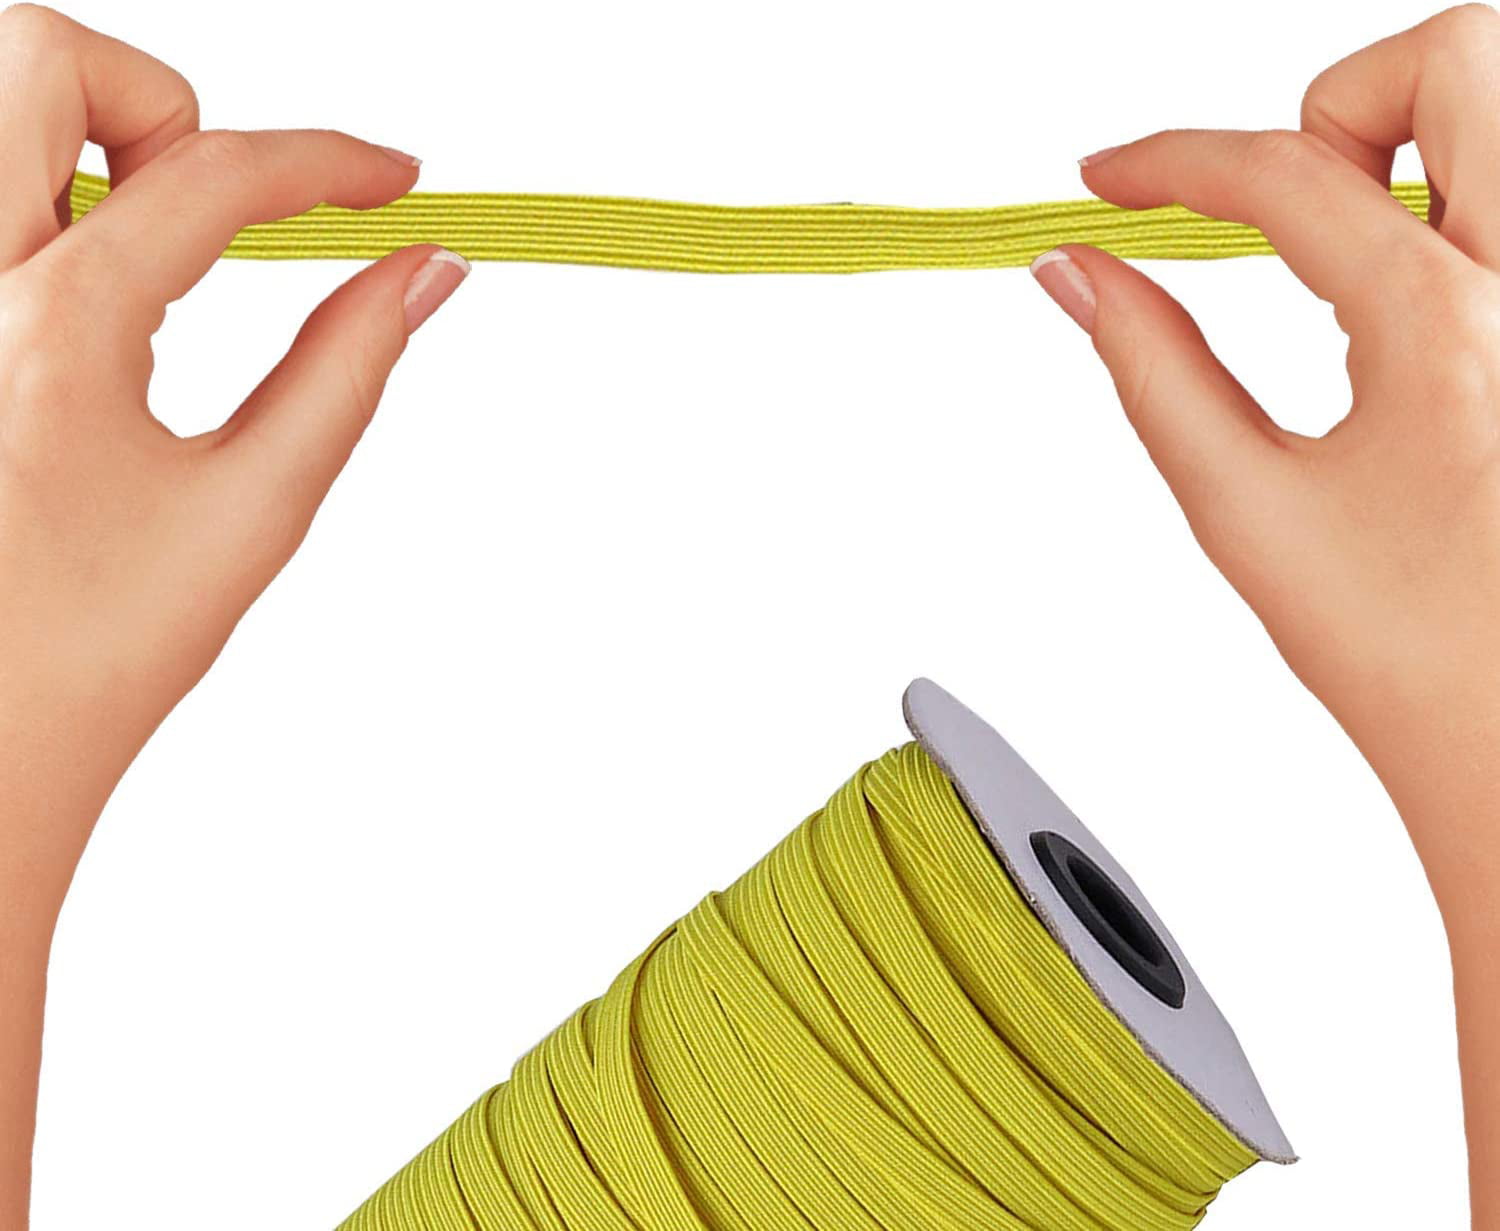 5mm Strong Rope Cord Yellow Round Crochet Tying Trimmings Chunky Yarn  Travel UK